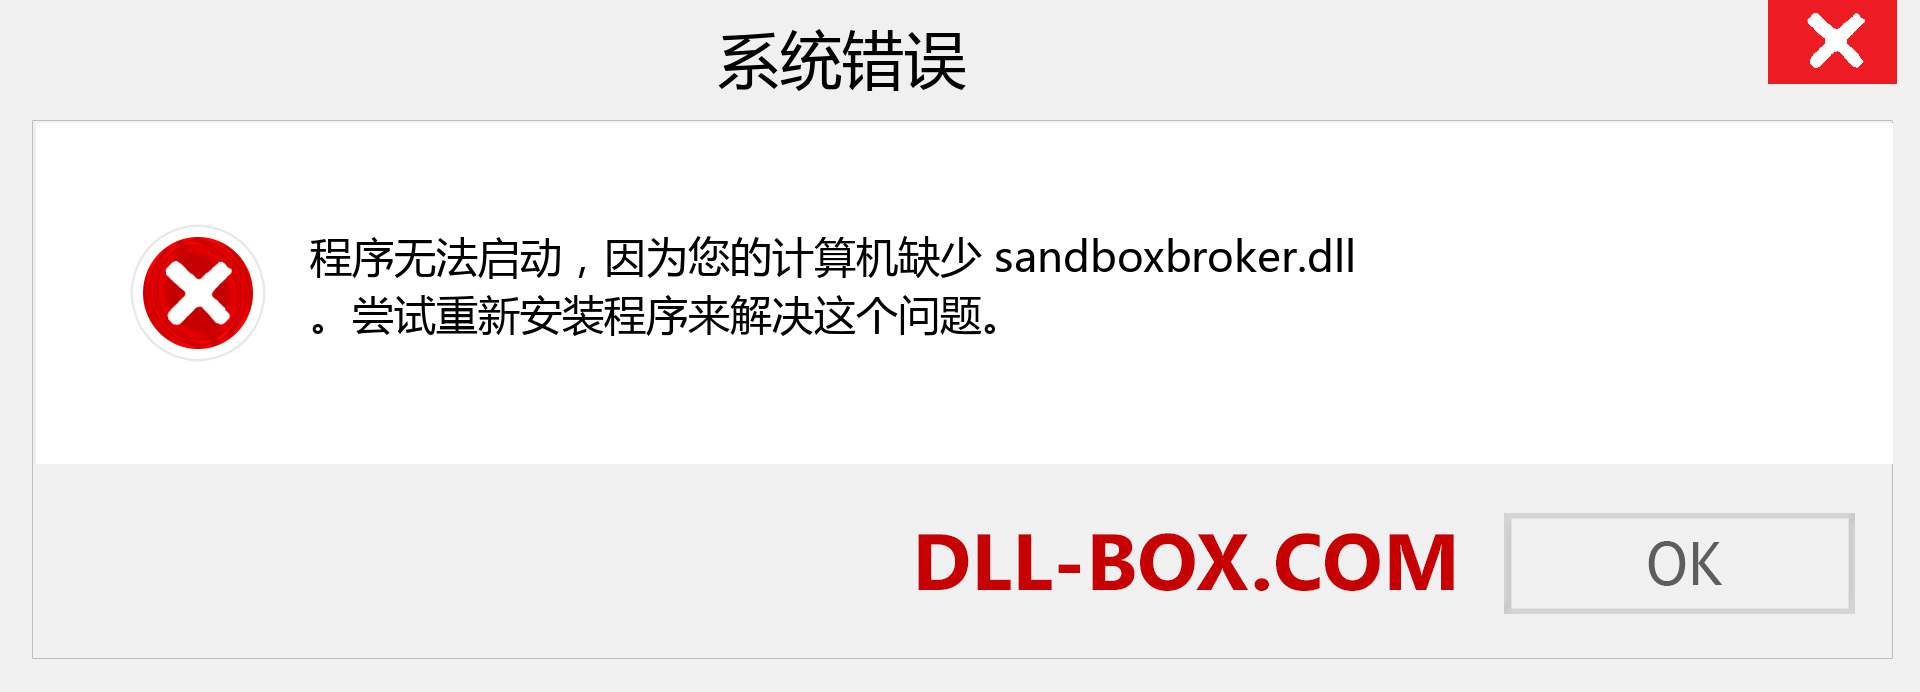 sandboxbroker.dll 文件丢失？。 适用于 Windows 7、8、10 的下载 - 修复 Windows、照片、图像上的 sandboxbroker dll 丢失错误